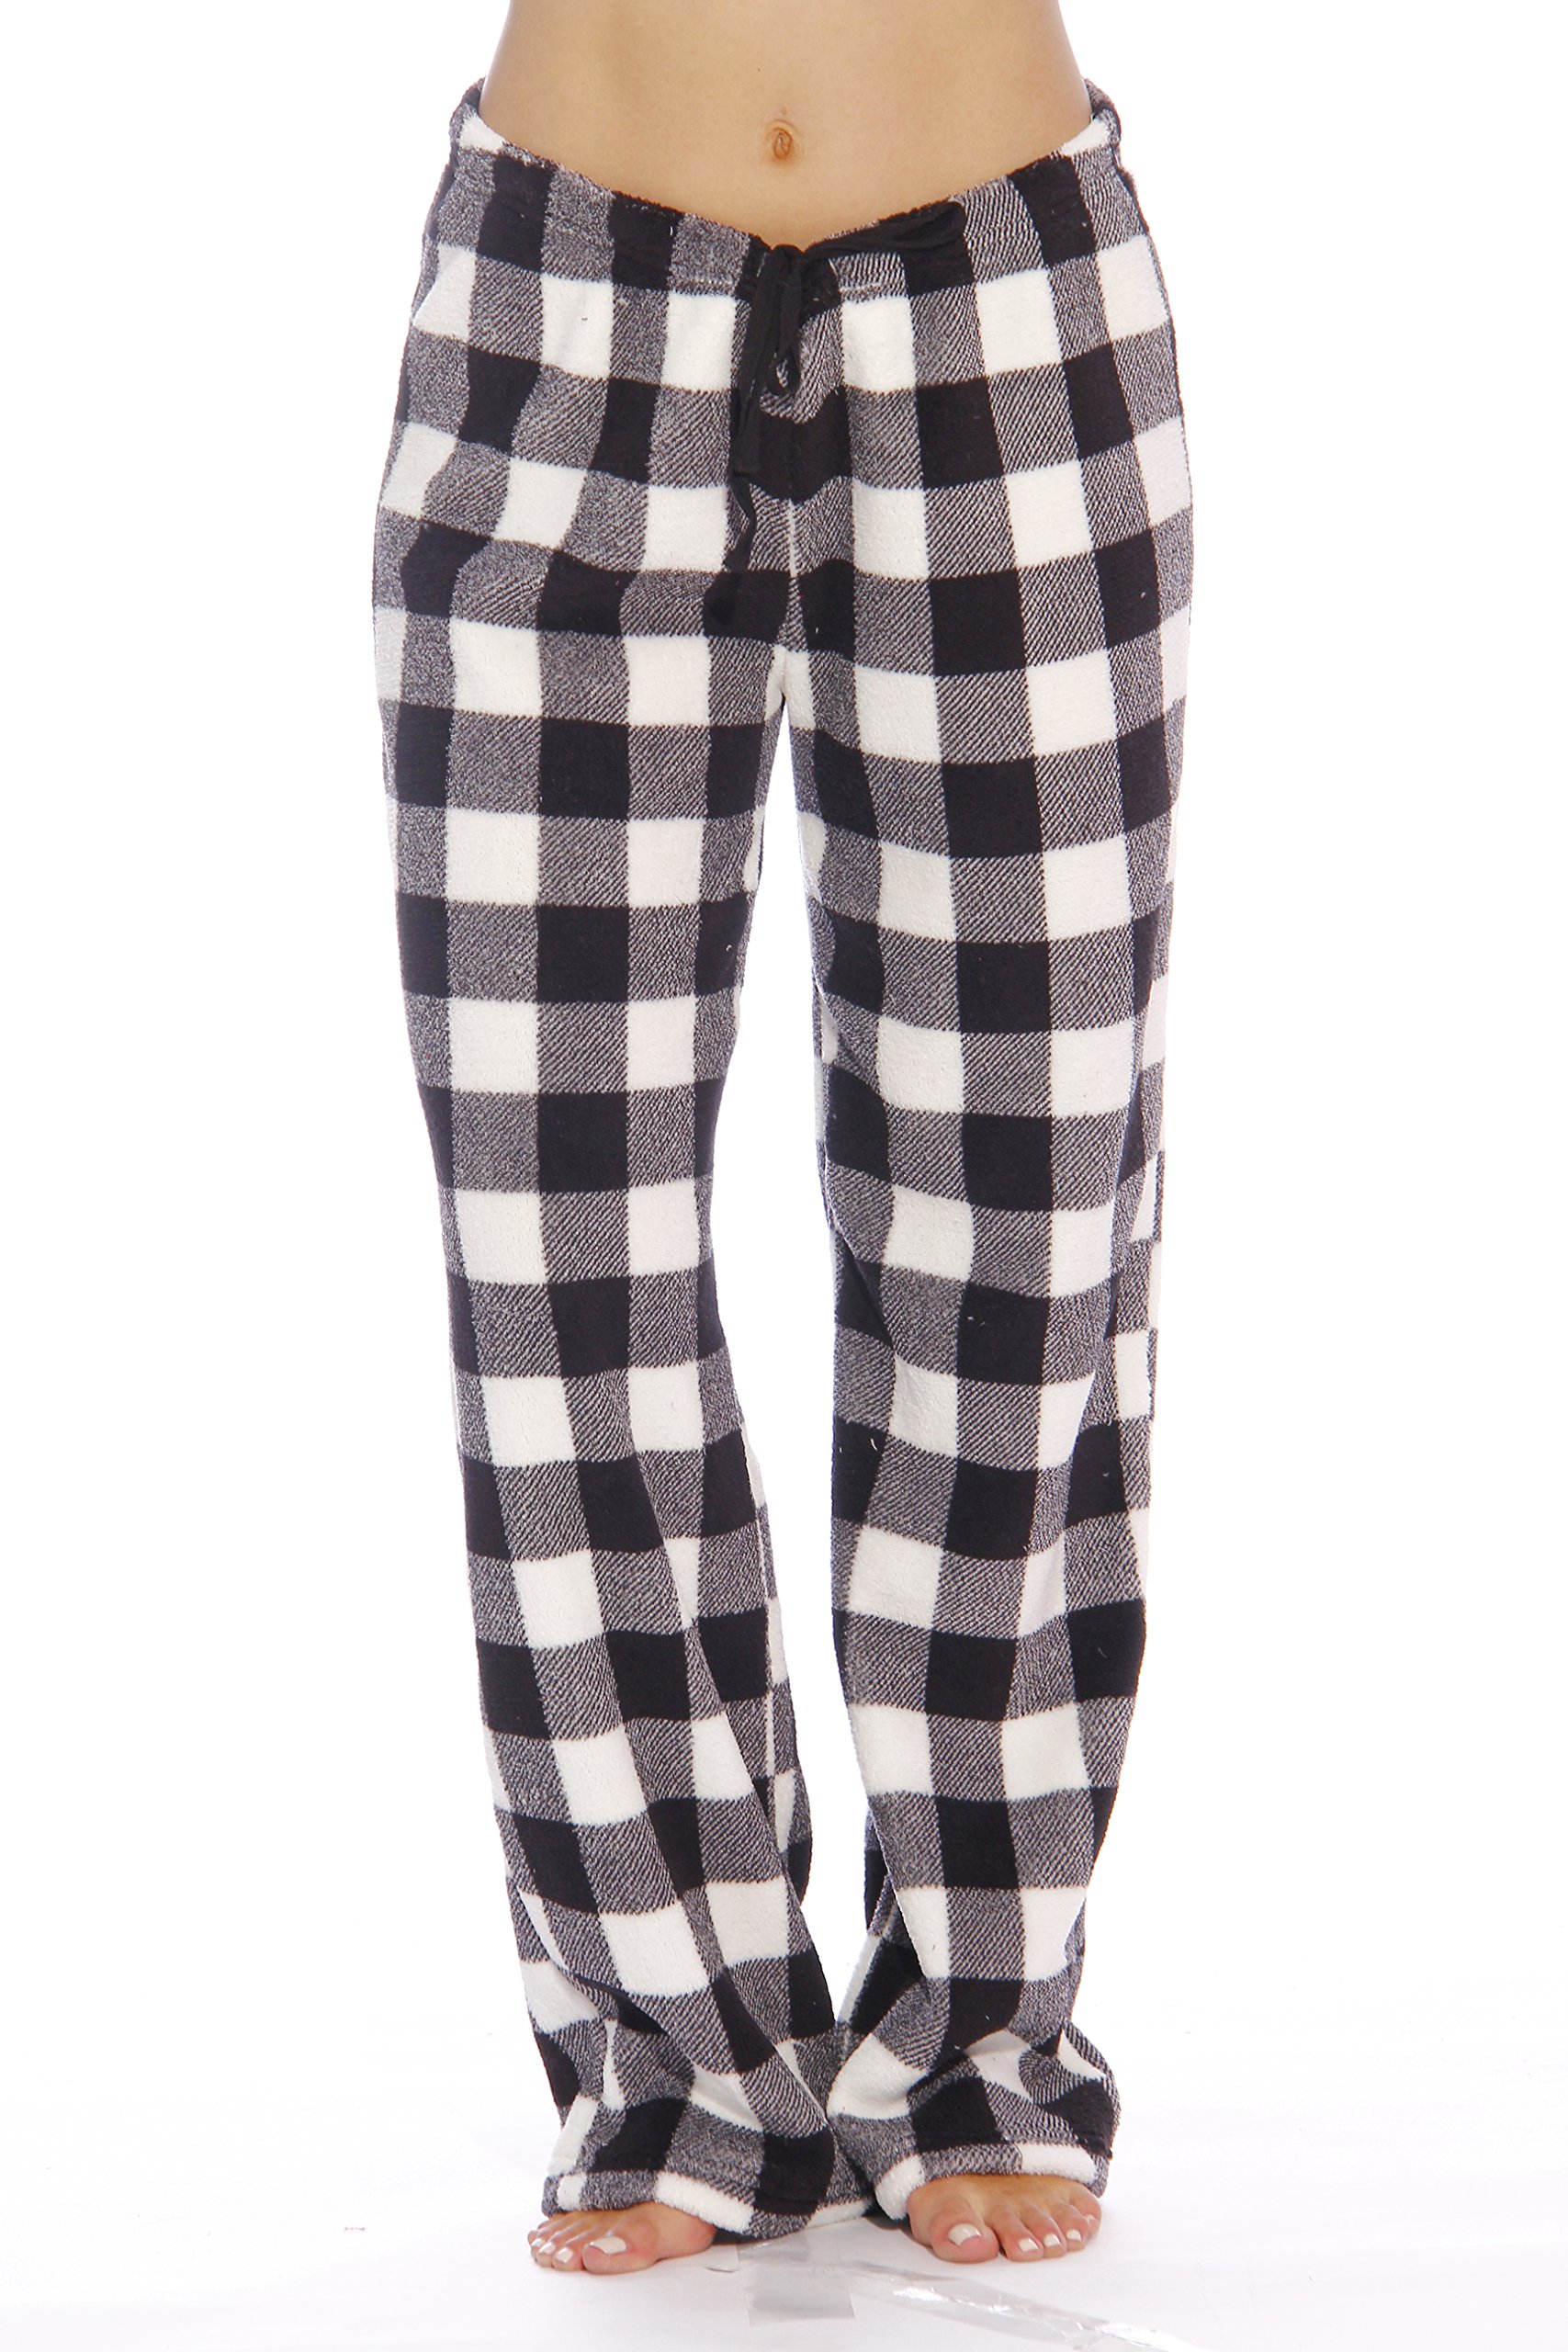 JUST LOVE Plush Pajama Pants for Girls